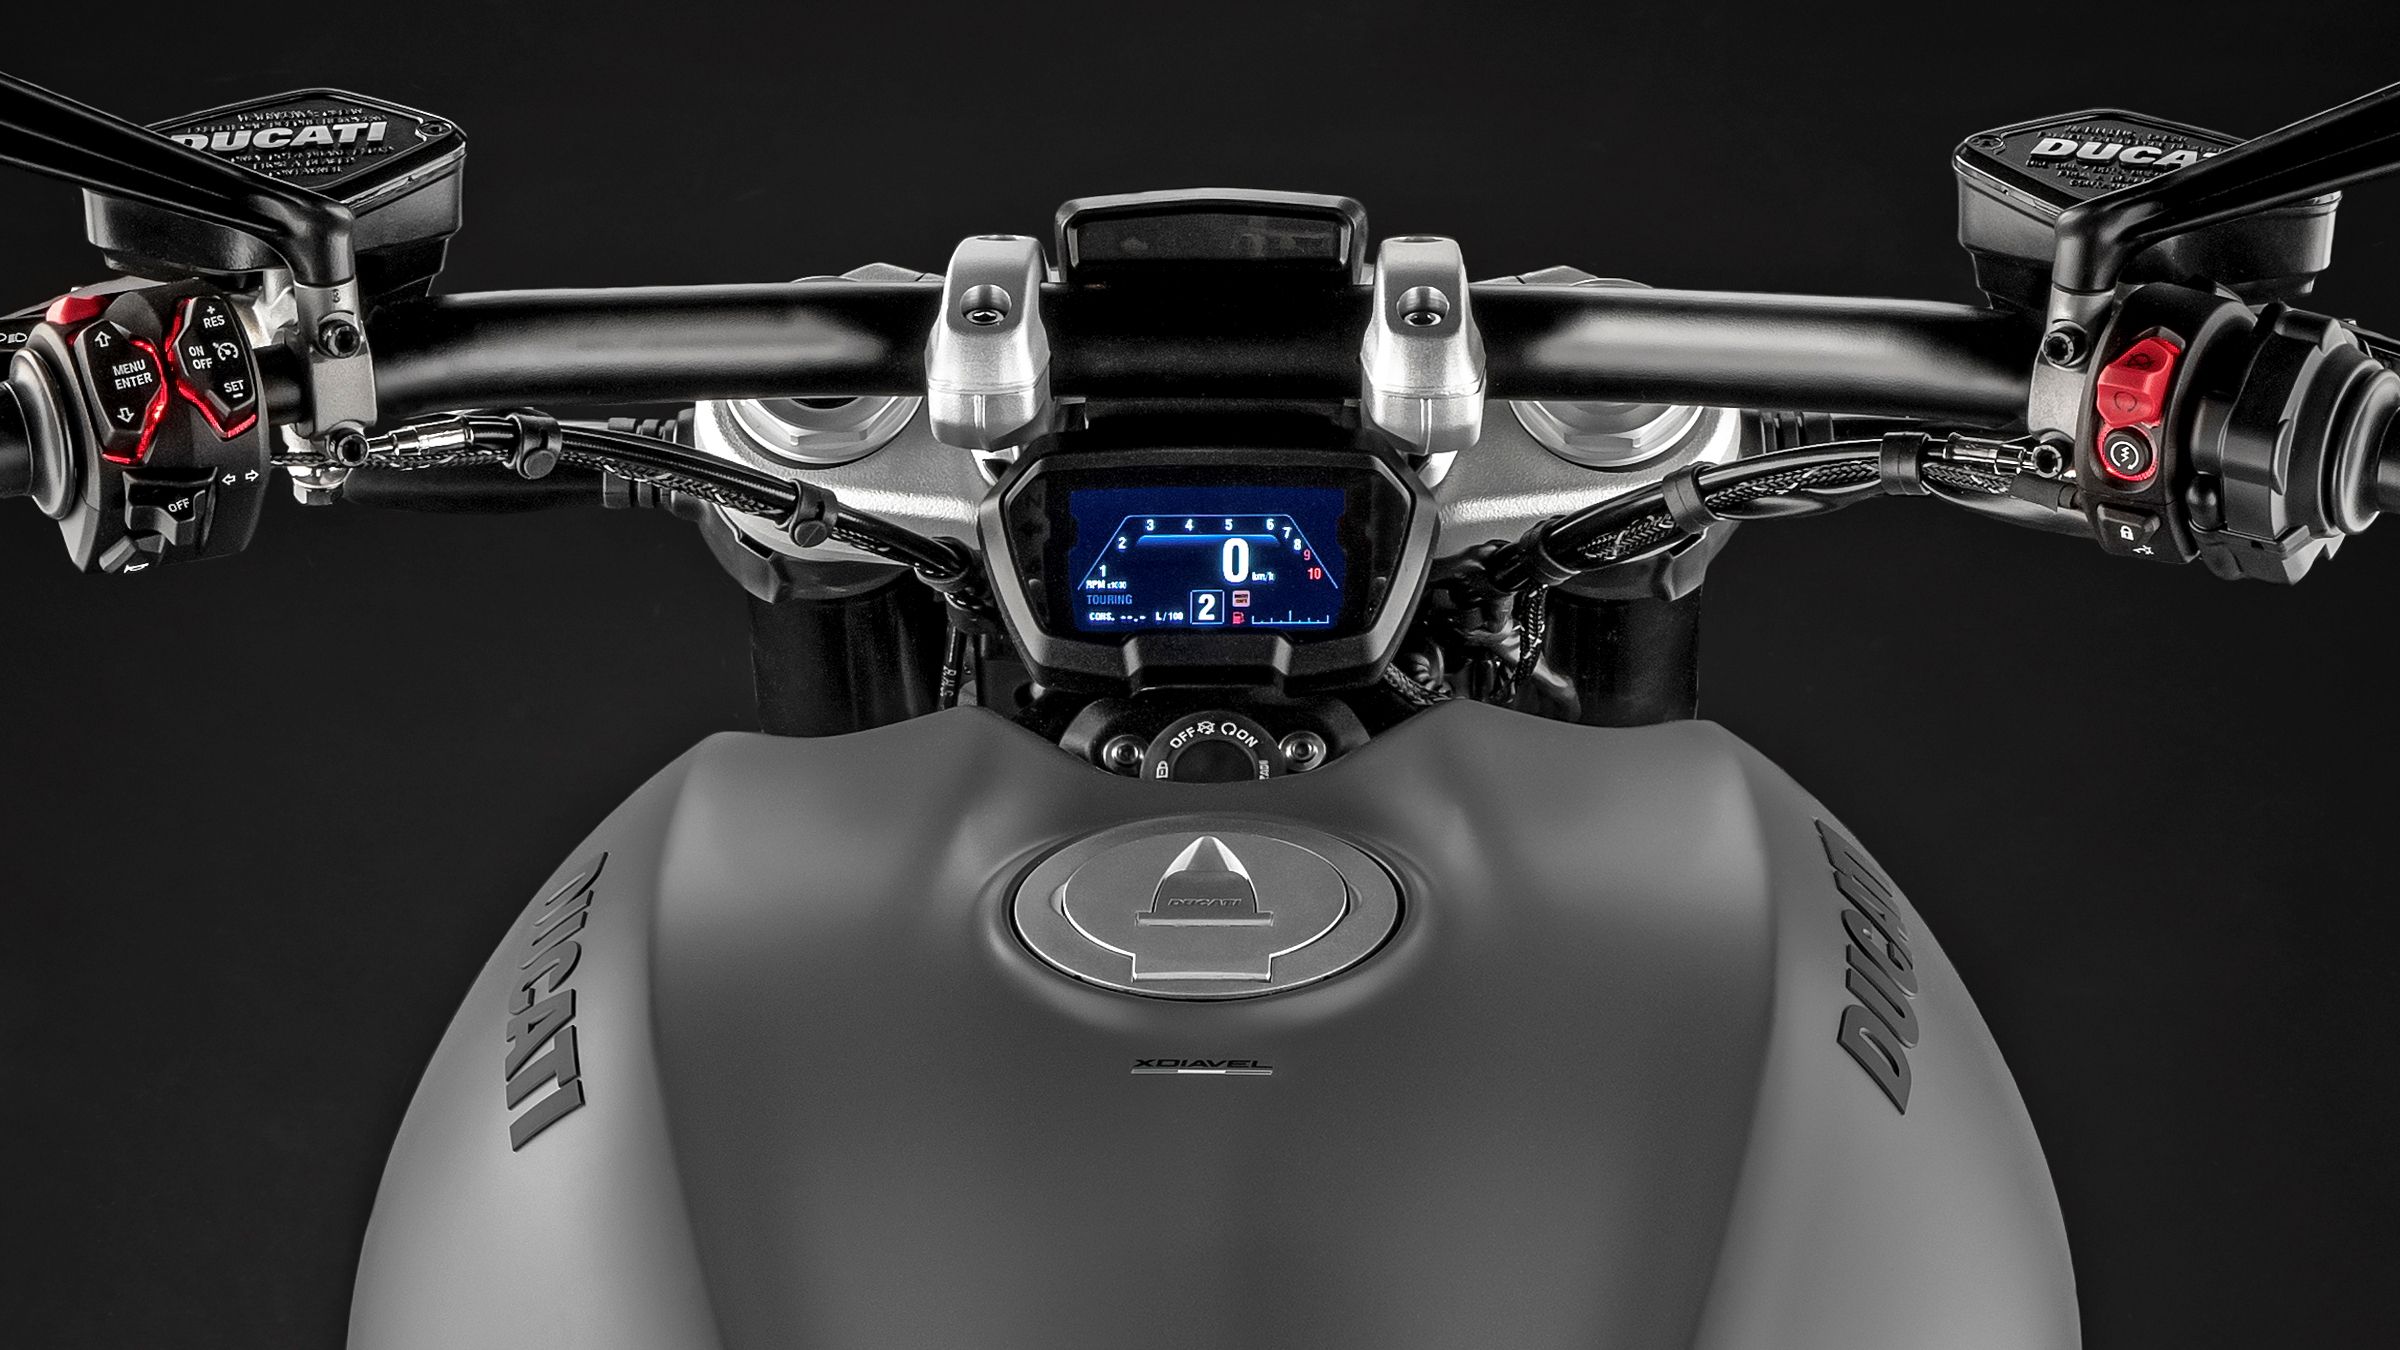 2016 - 2020 Ducati XDiavel / XDiavel S